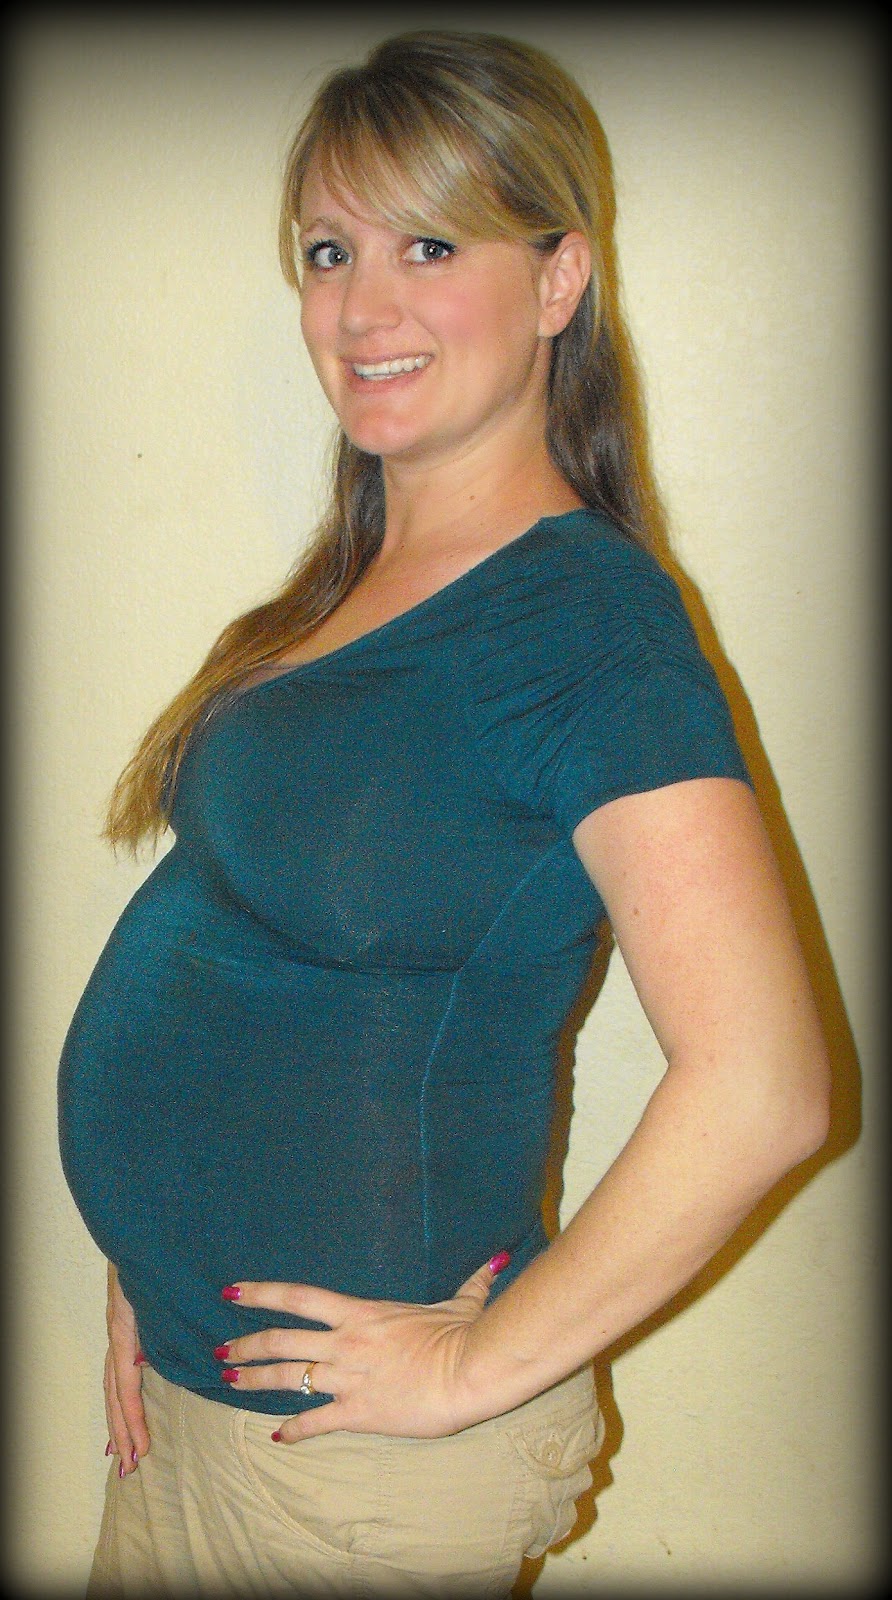 Meet Virginia: 33 Weeks Pregnant and Remembering God's Healing